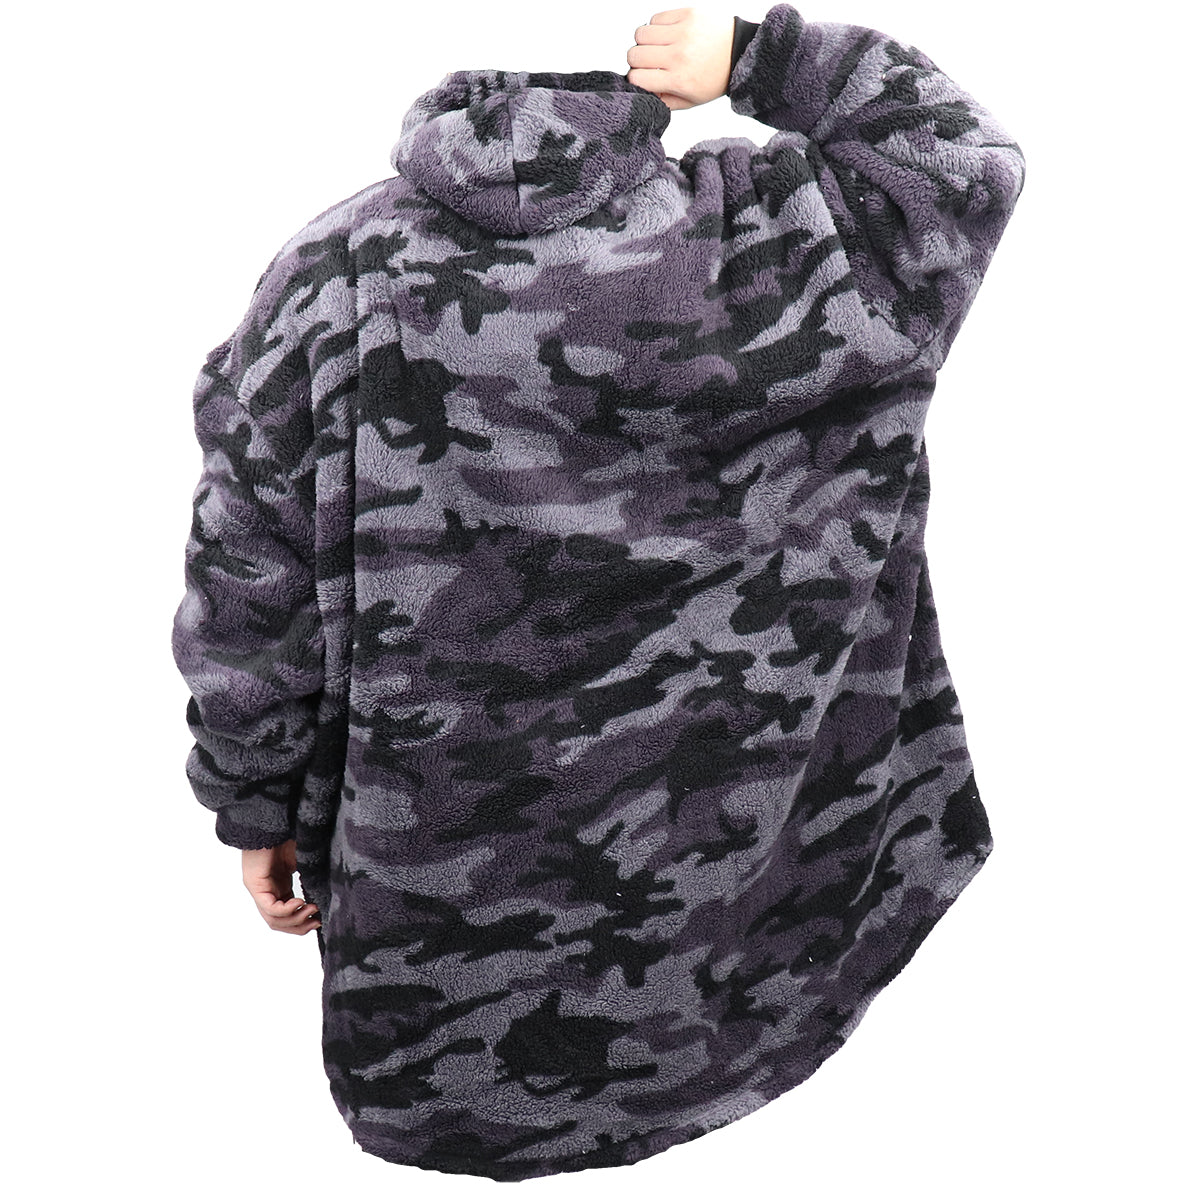 Oversized Soft Pullover Plain Hoodie Warm Fleece Blanket Plush Winter Sweatshirt, Baby Pink, Adult